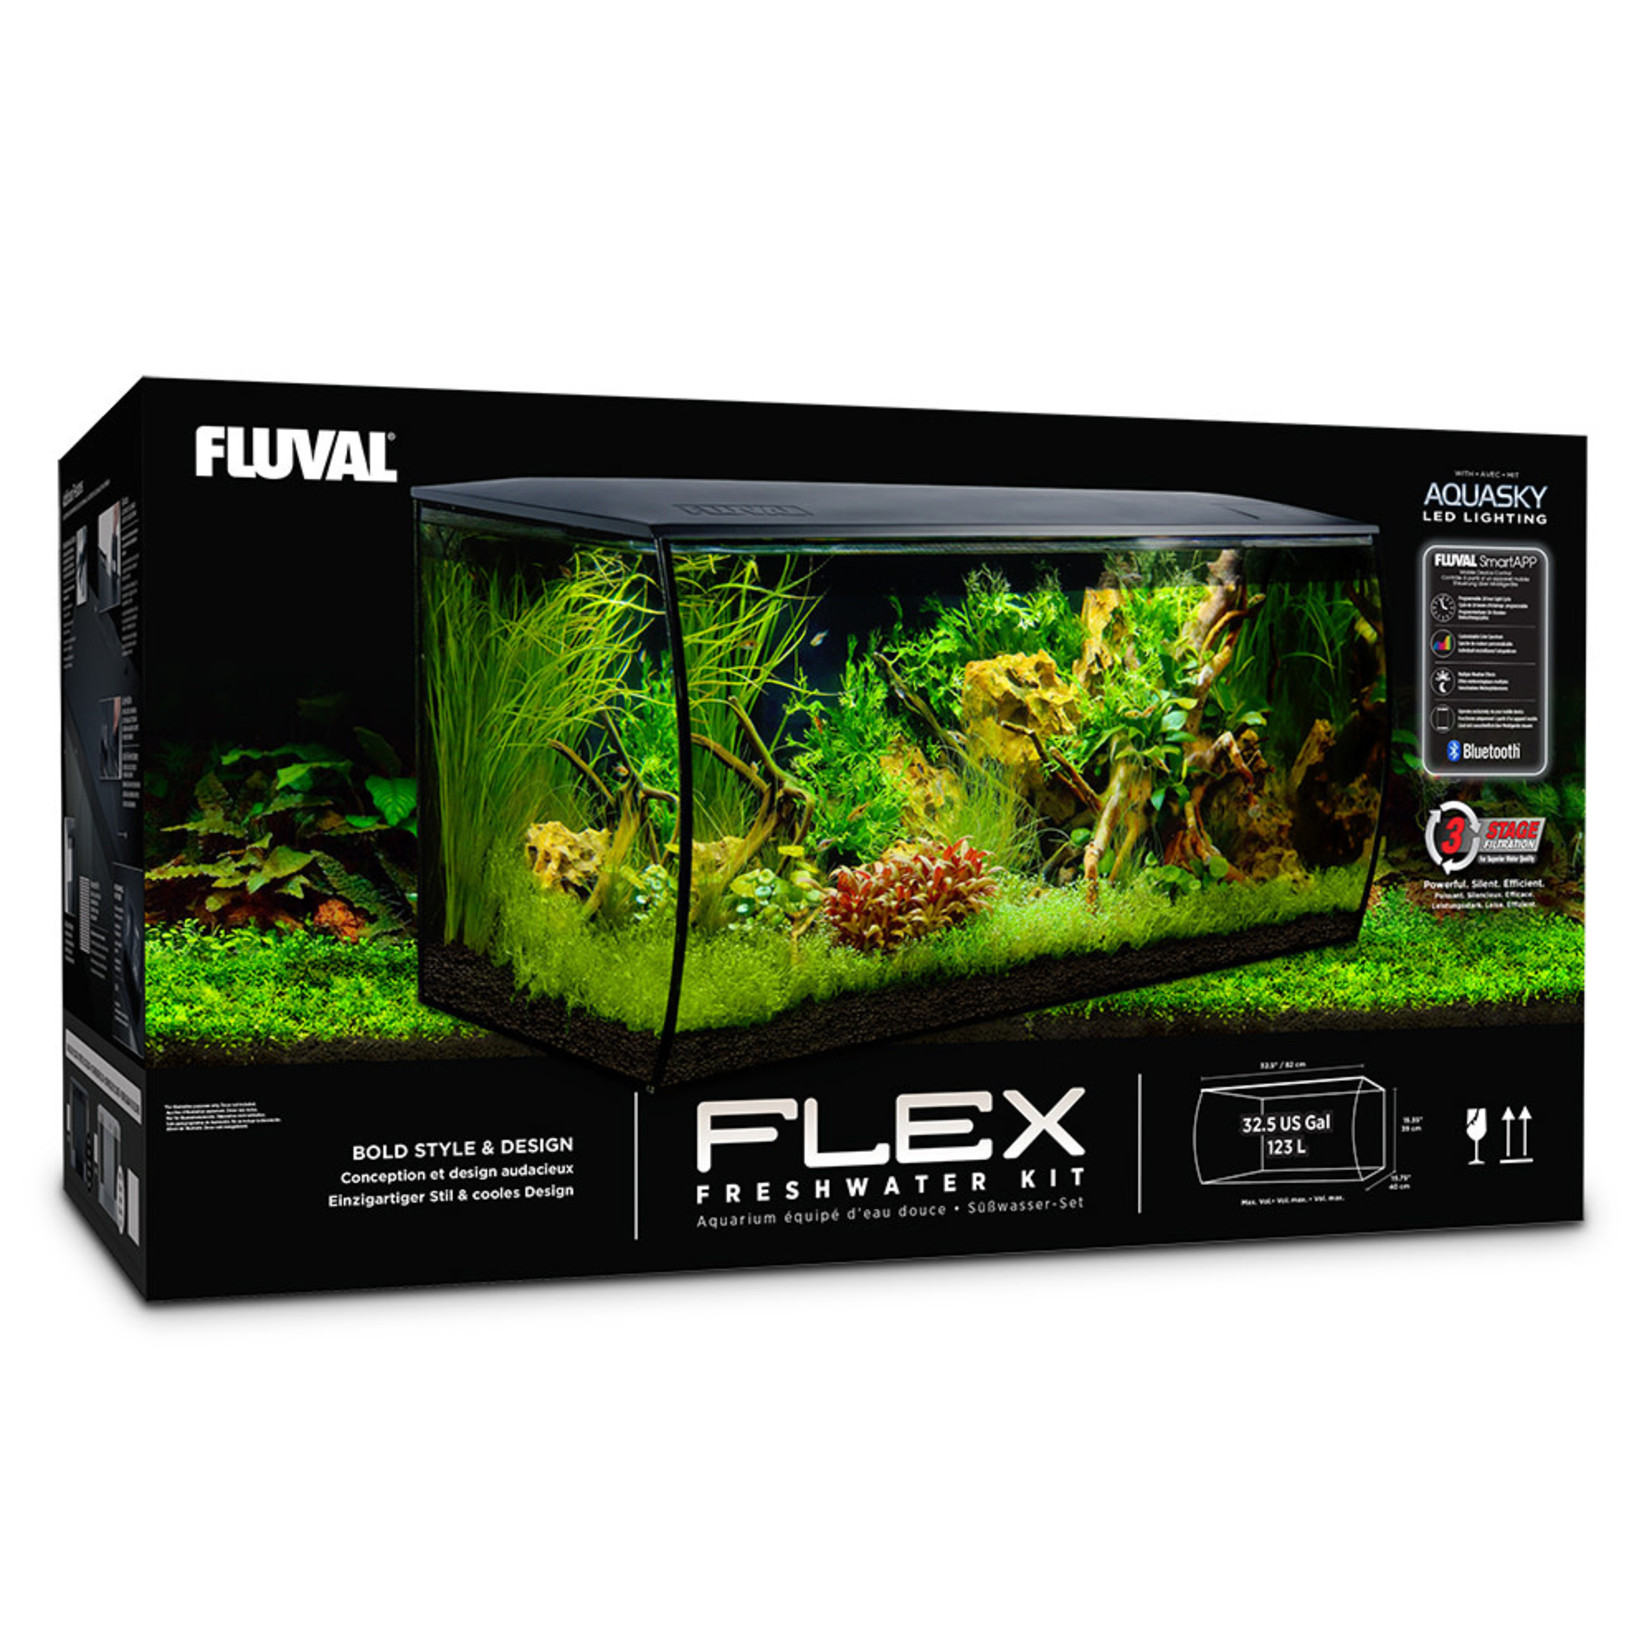 Fluval Fluval FLEX Aquarium Kit - Black - 123 L (32.5 US Gal)